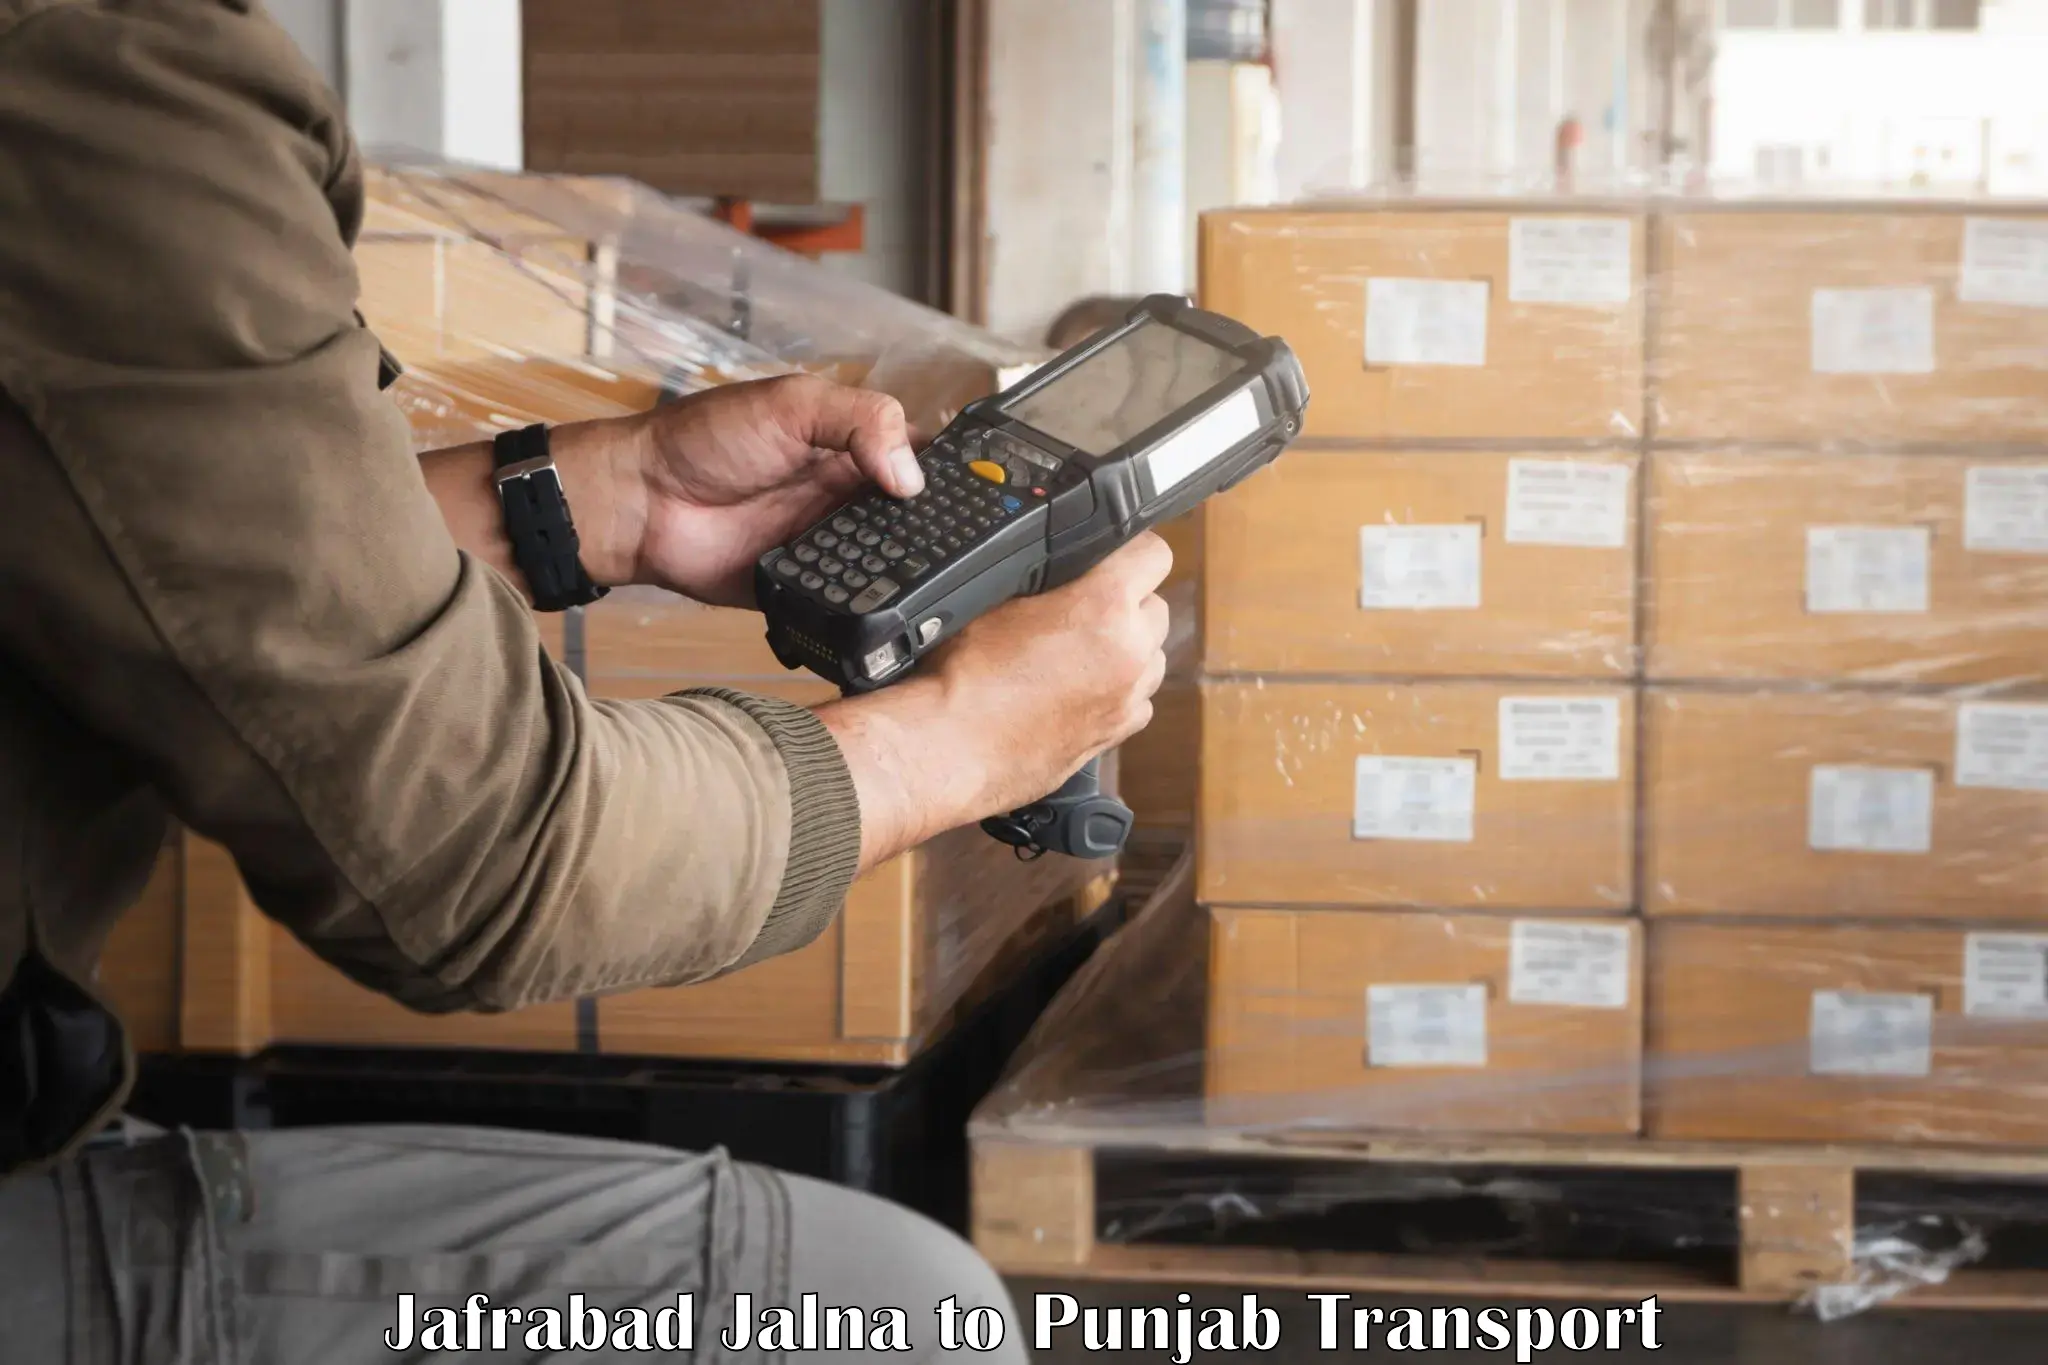 Domestic goods transportation services Jafrabad Jalna to Ajnala